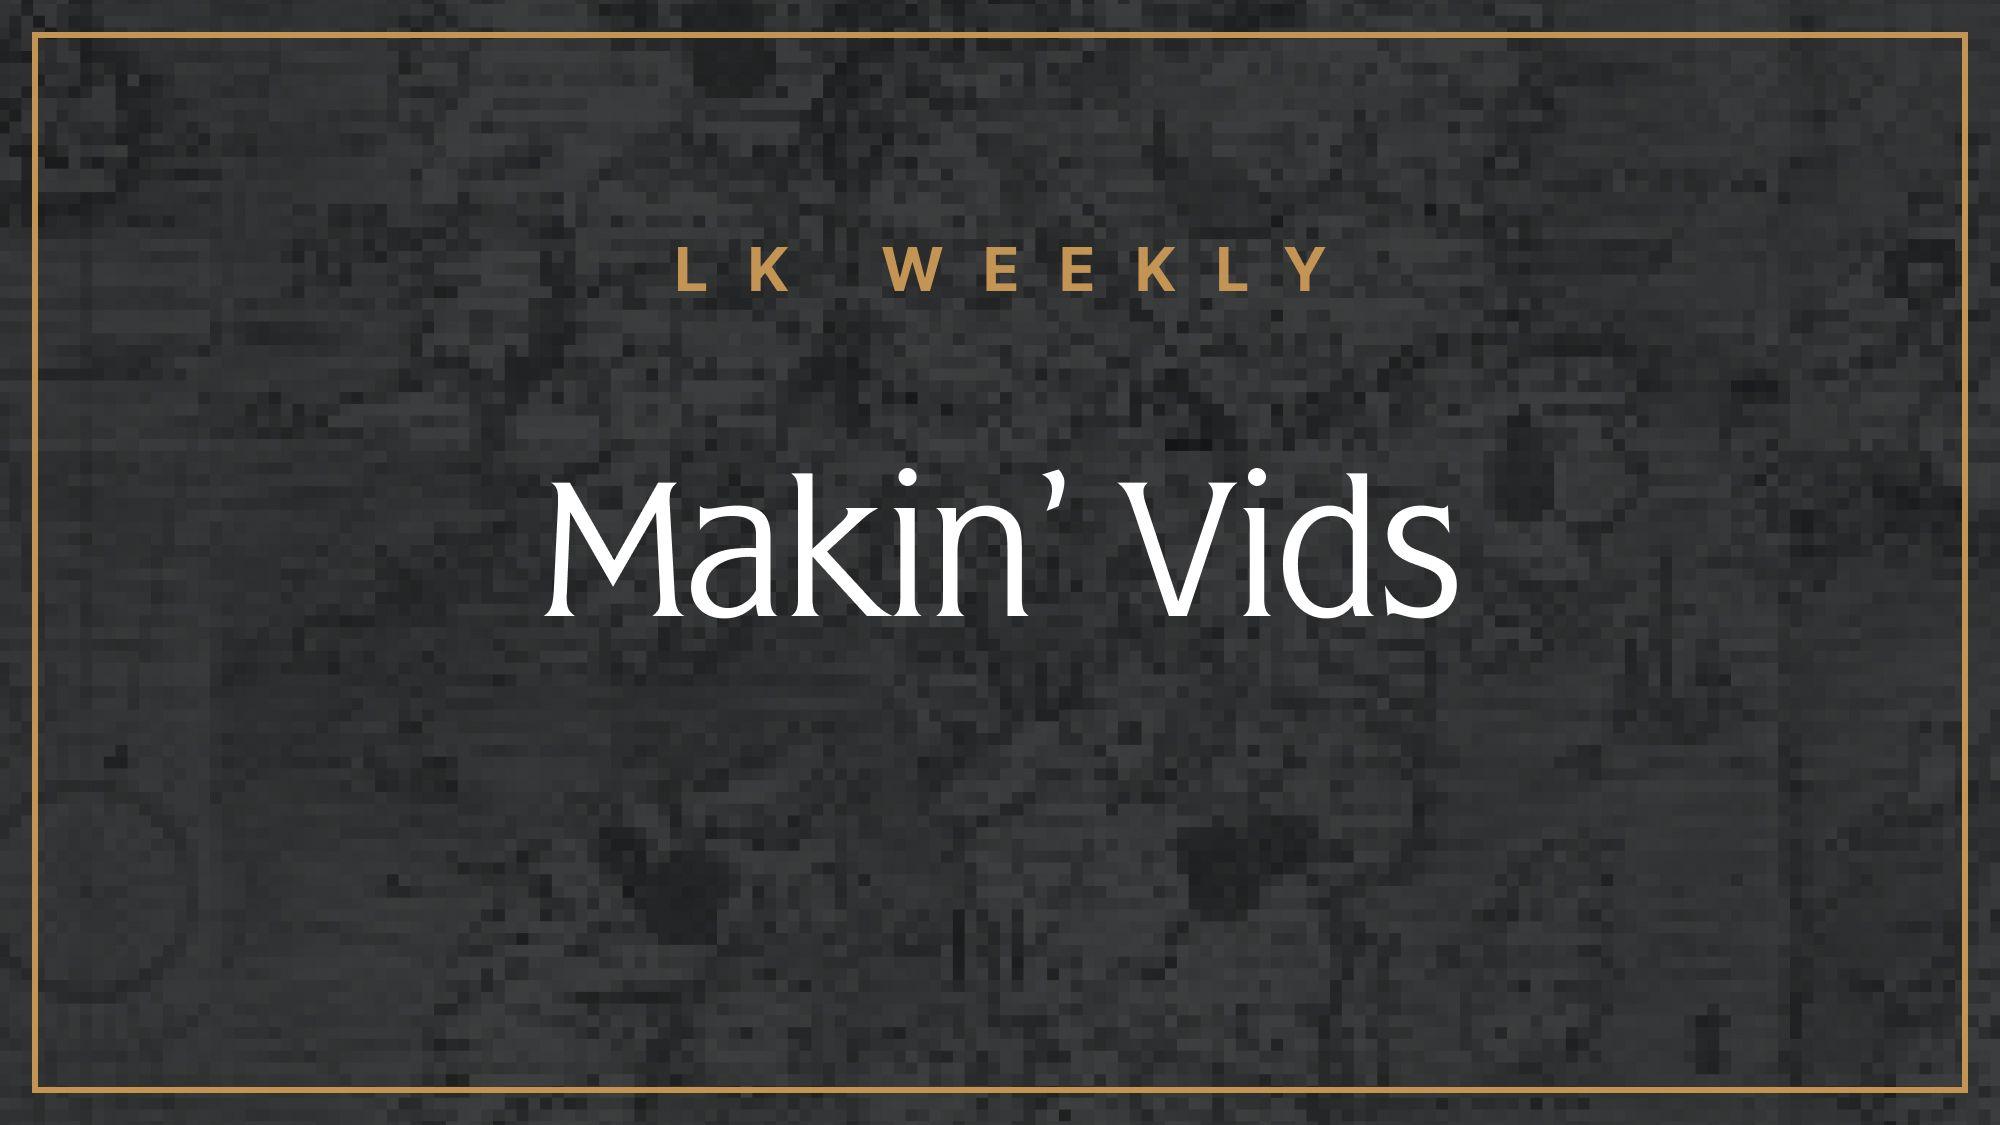 LK Weekly: Makin' vids